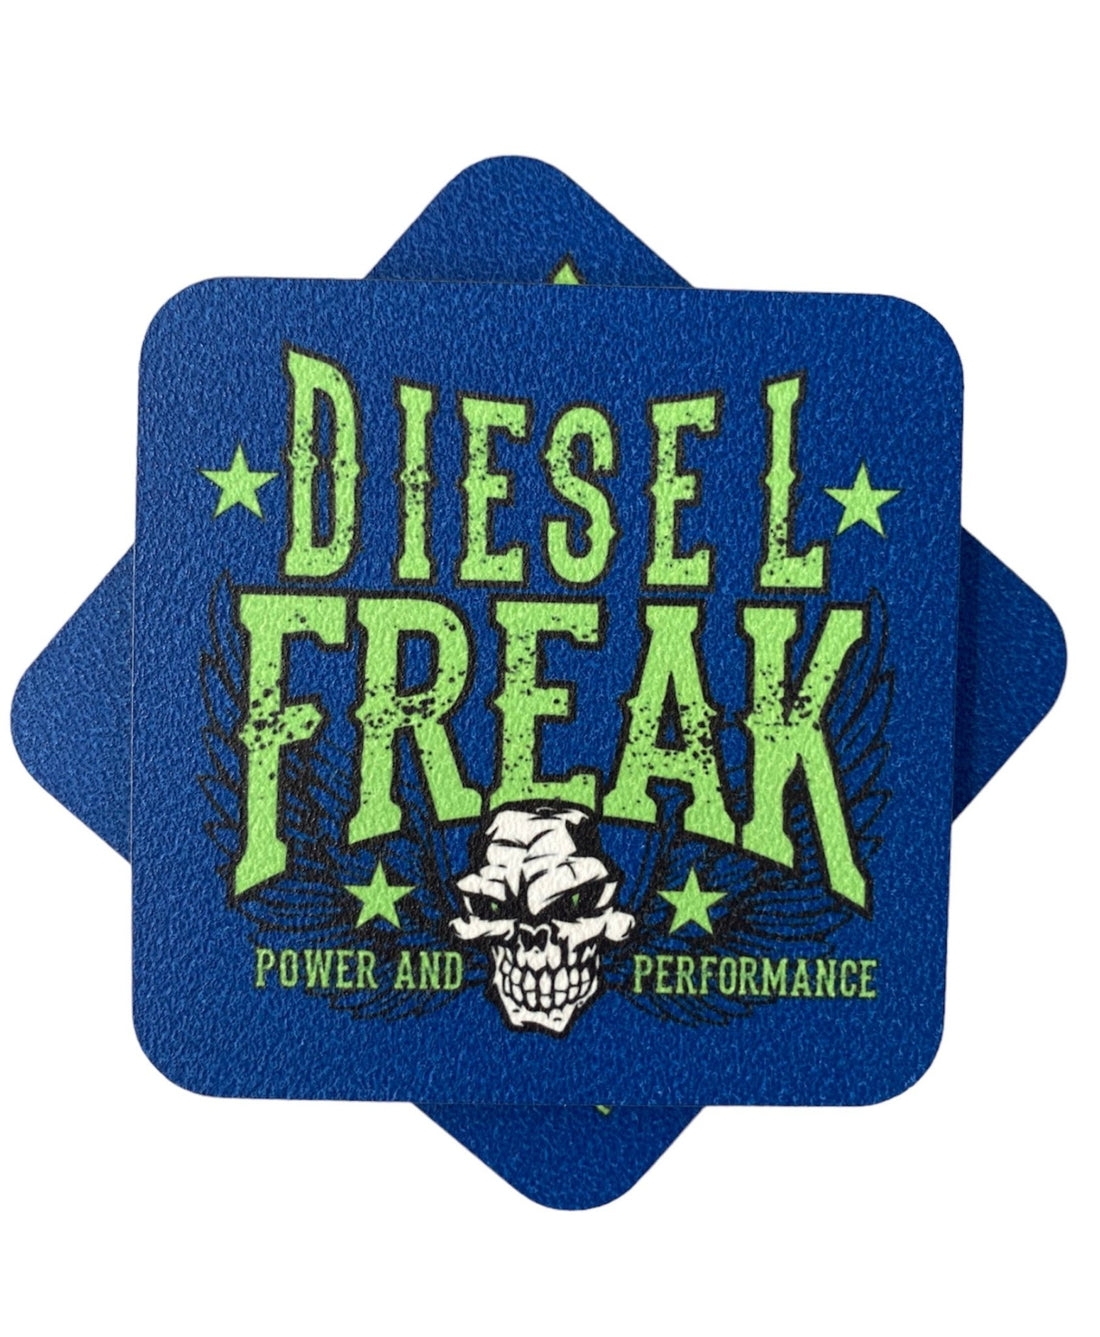 Power and Performance Textured Coaster - Diesel Freak